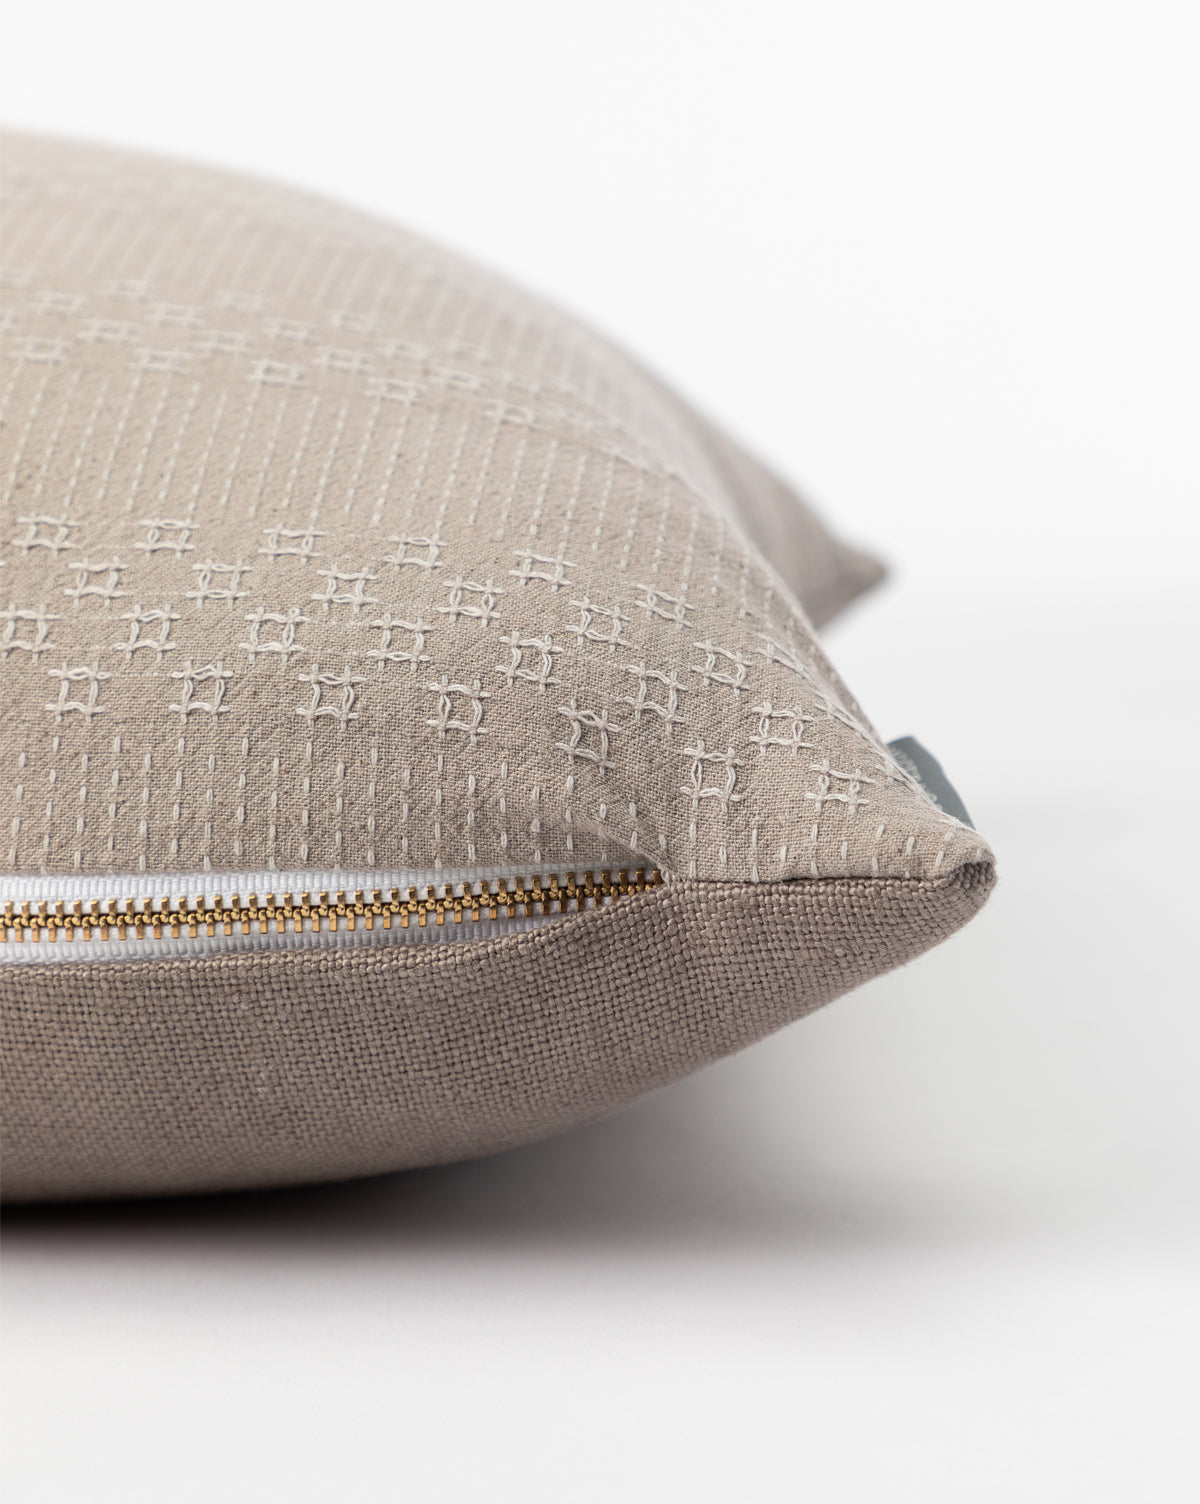 Tangren, Vintage Gray Crosshatch Pillow Cover No. 3